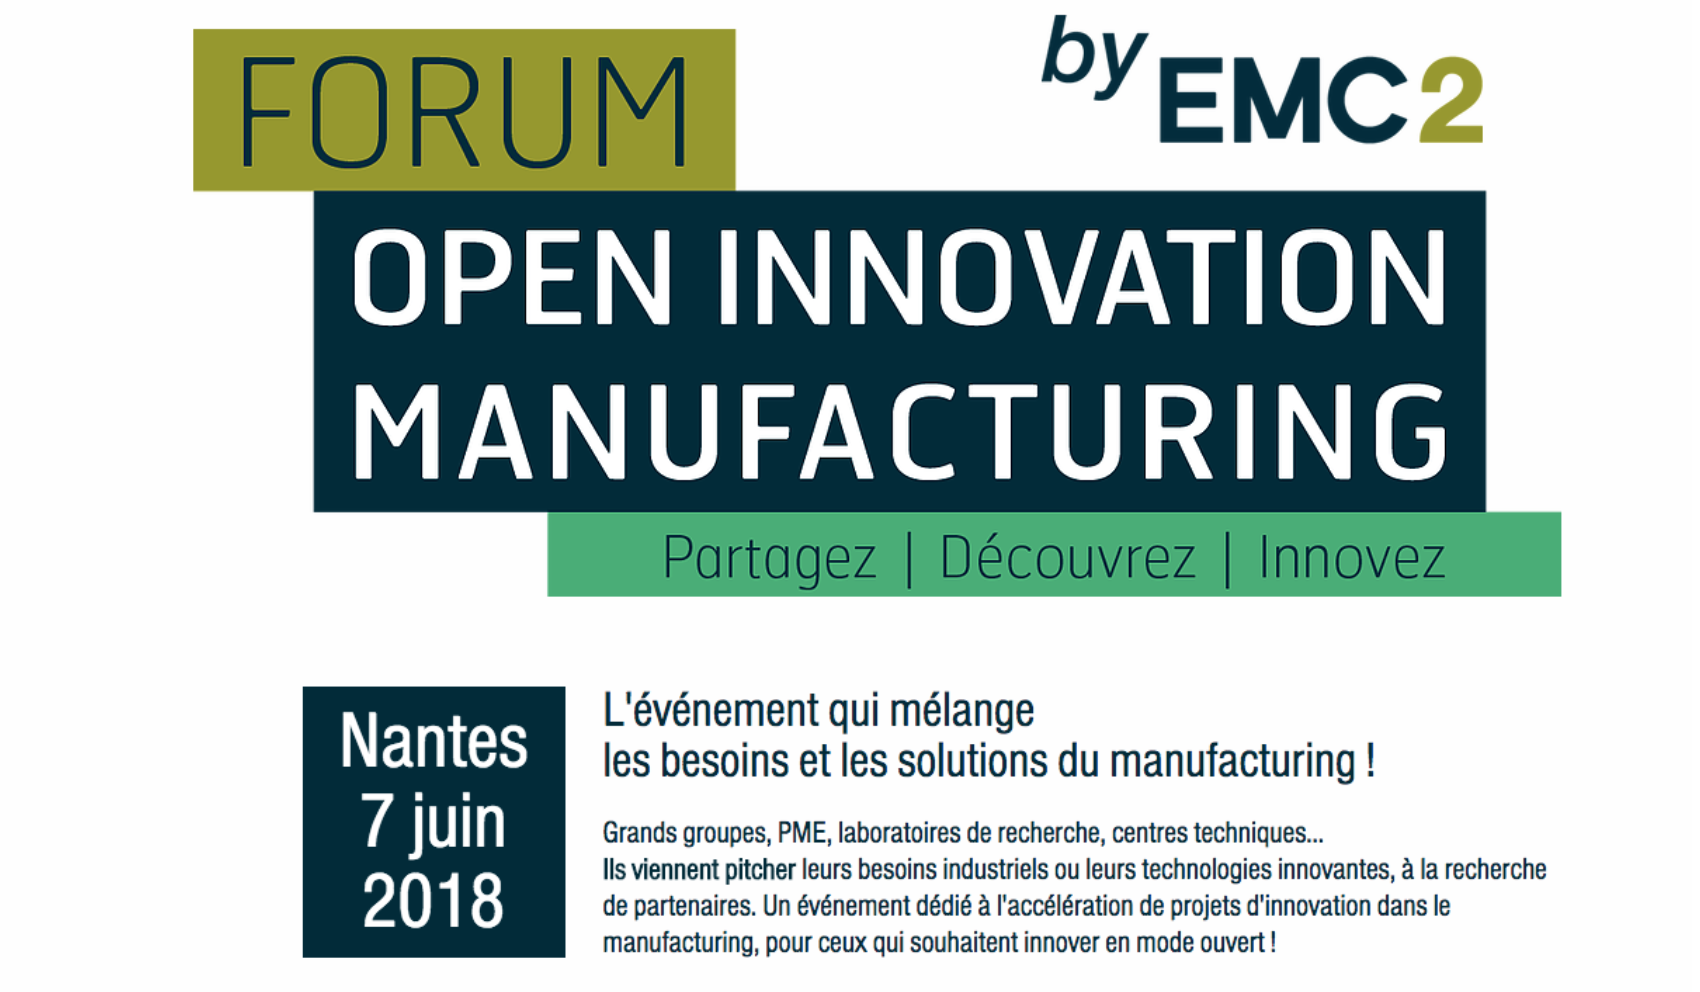 Forum open innnovation manufacturing